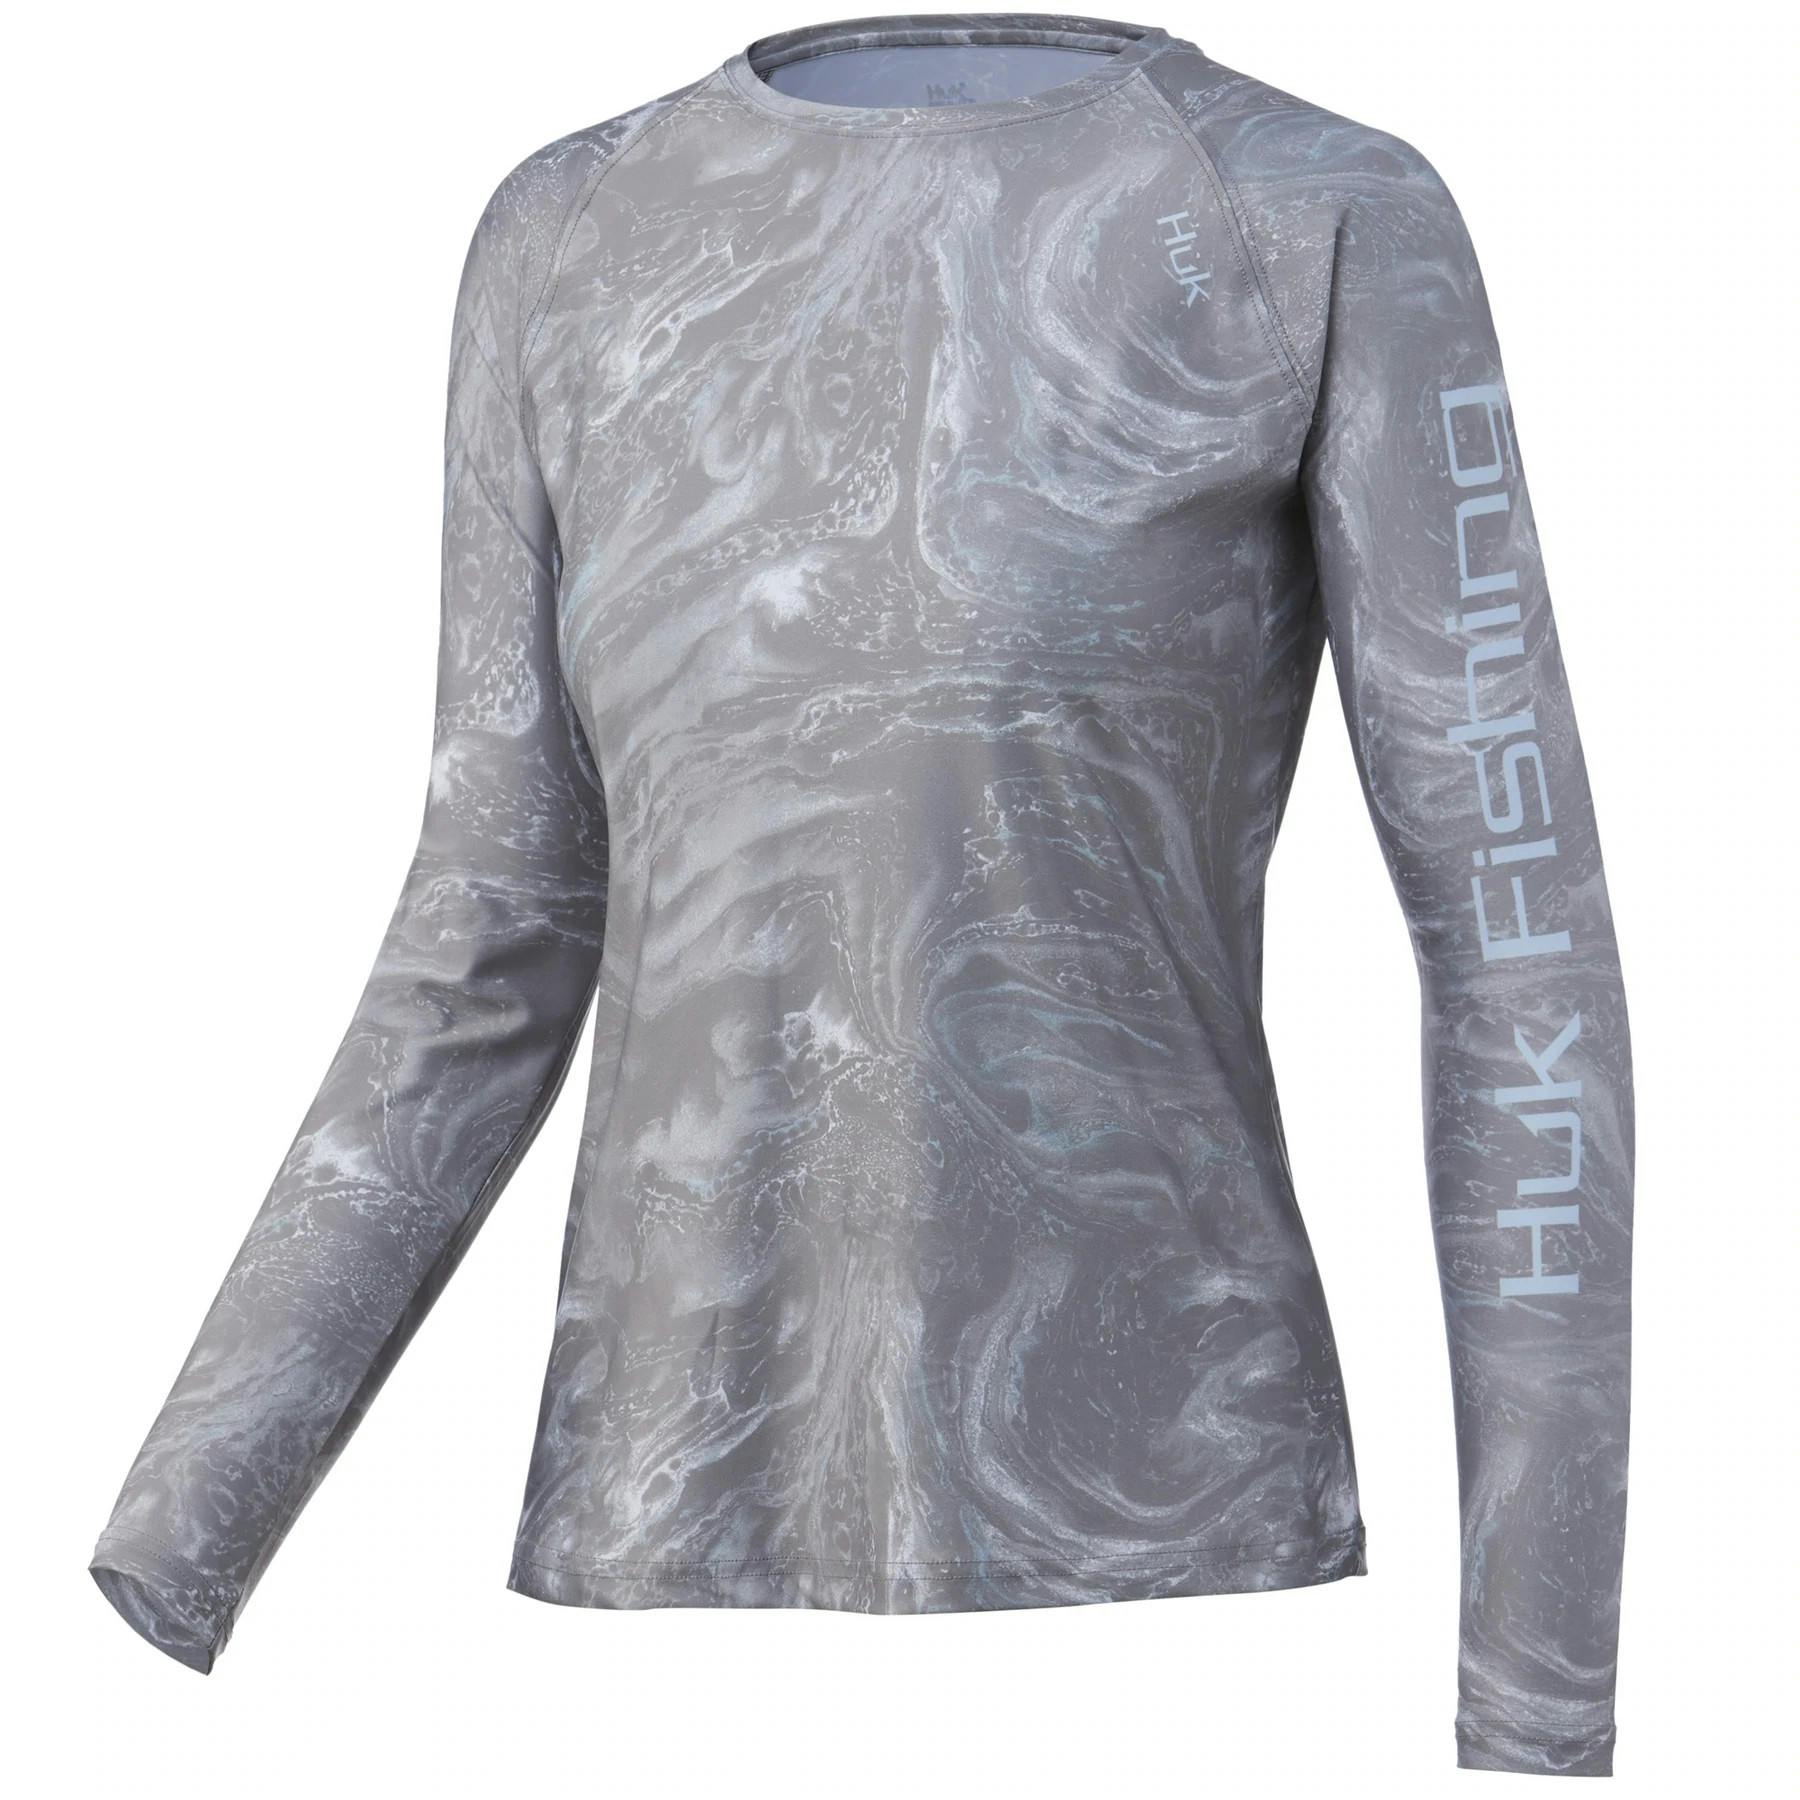 Huk Women's Stone Shore Pursuit Performance Shirt Front - Overcast Gray